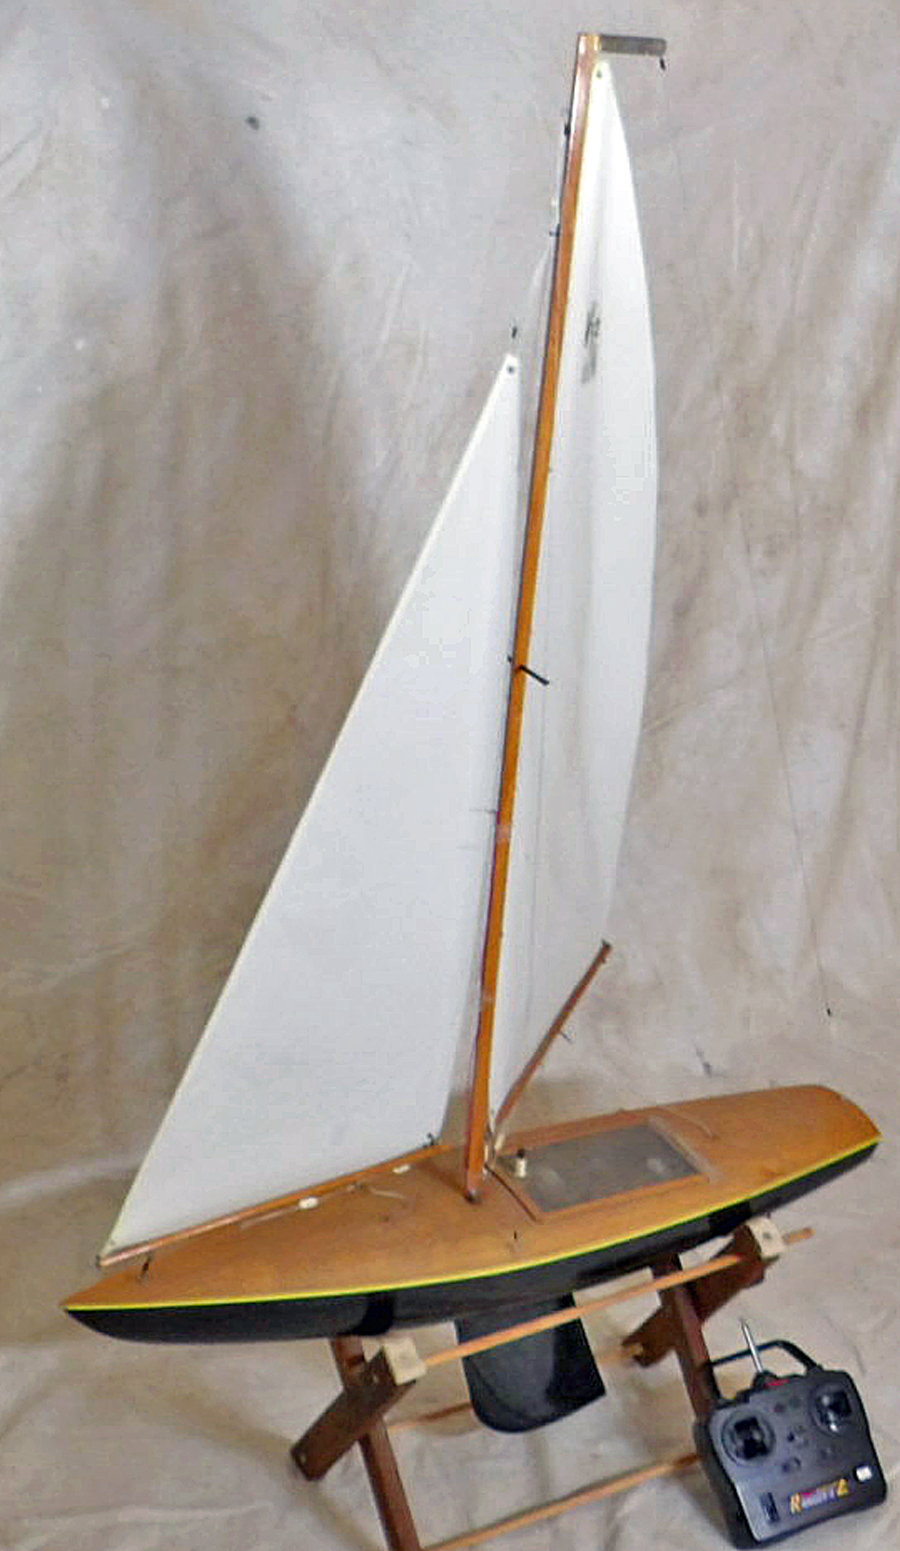 v32 rc sailboat